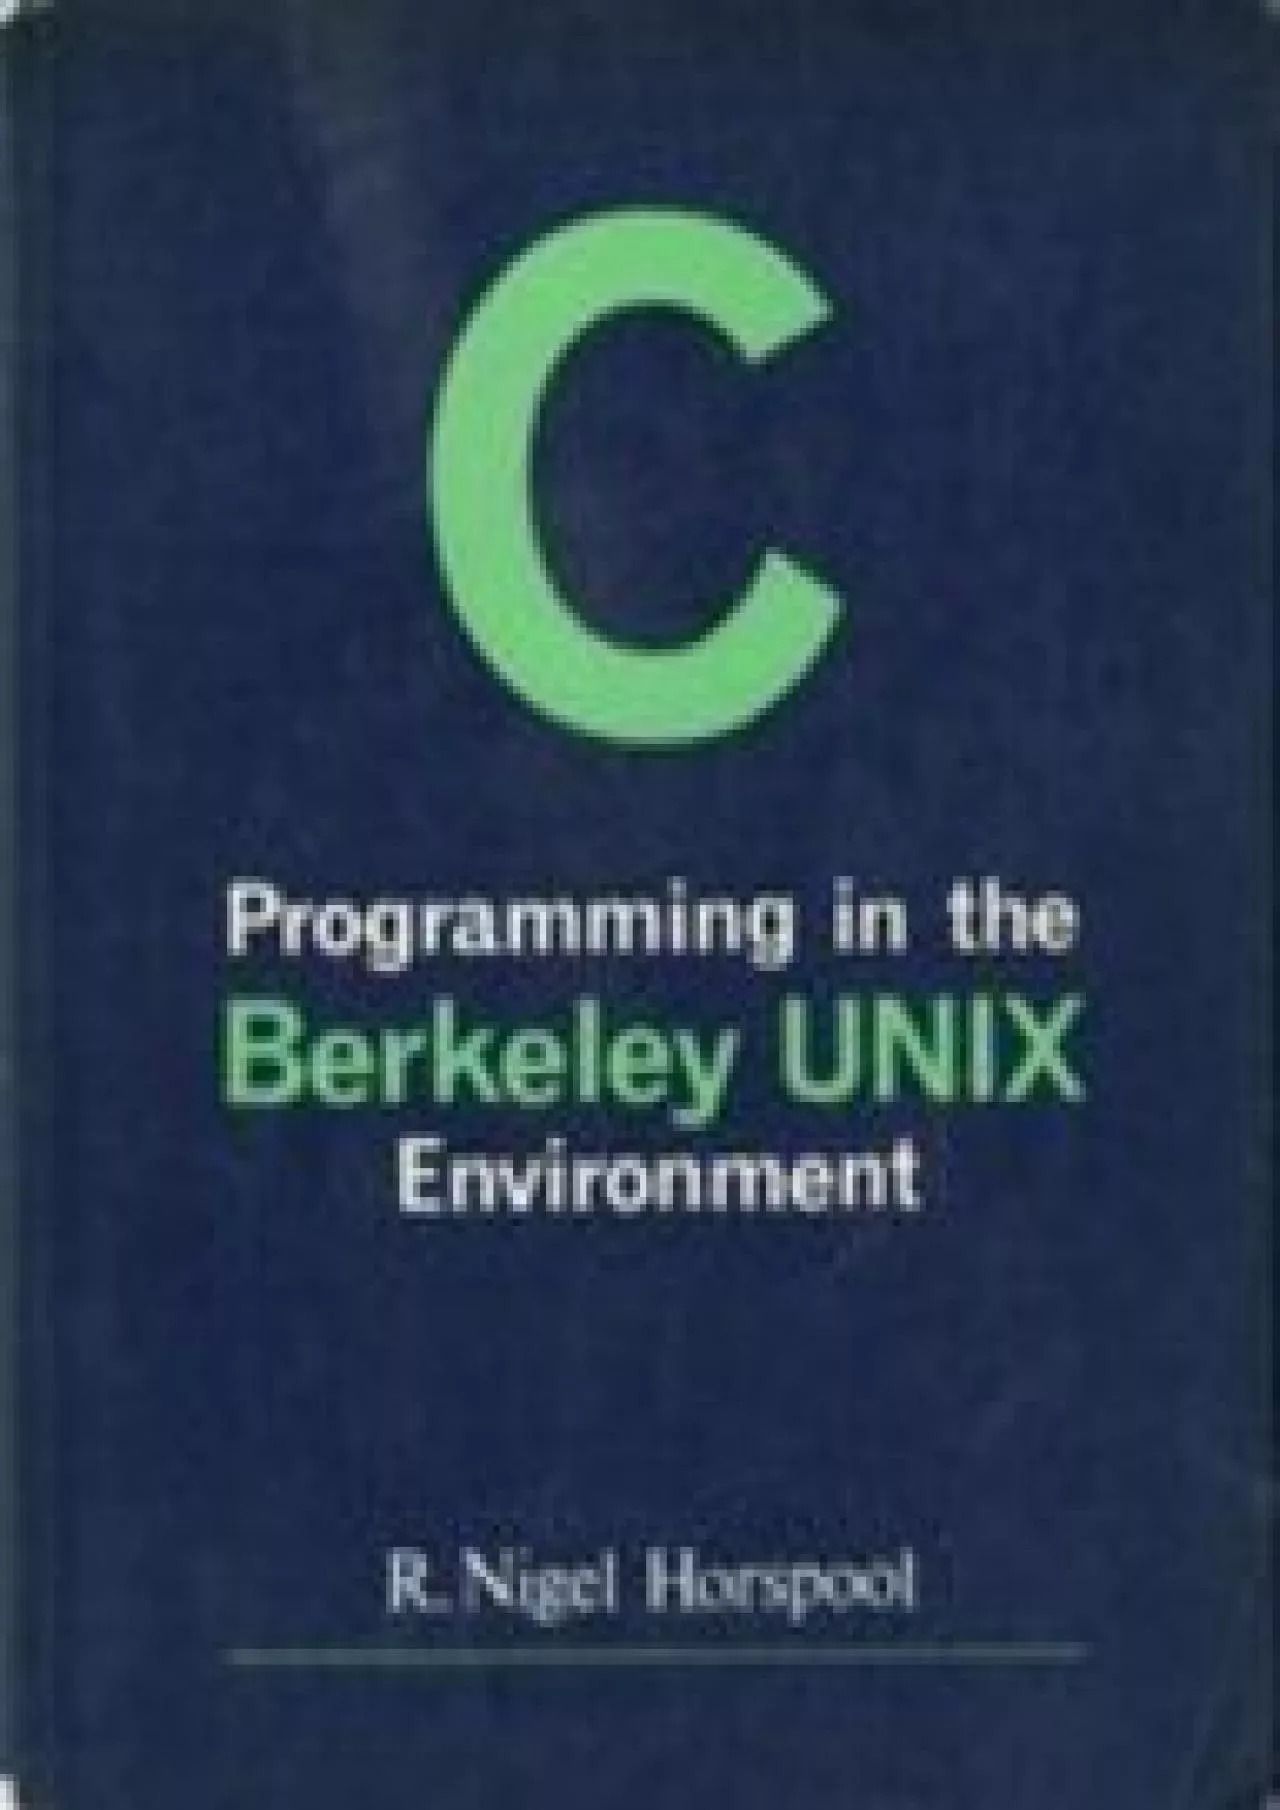 [eBOOK]-C Programming in the Berkeley Unix Environment